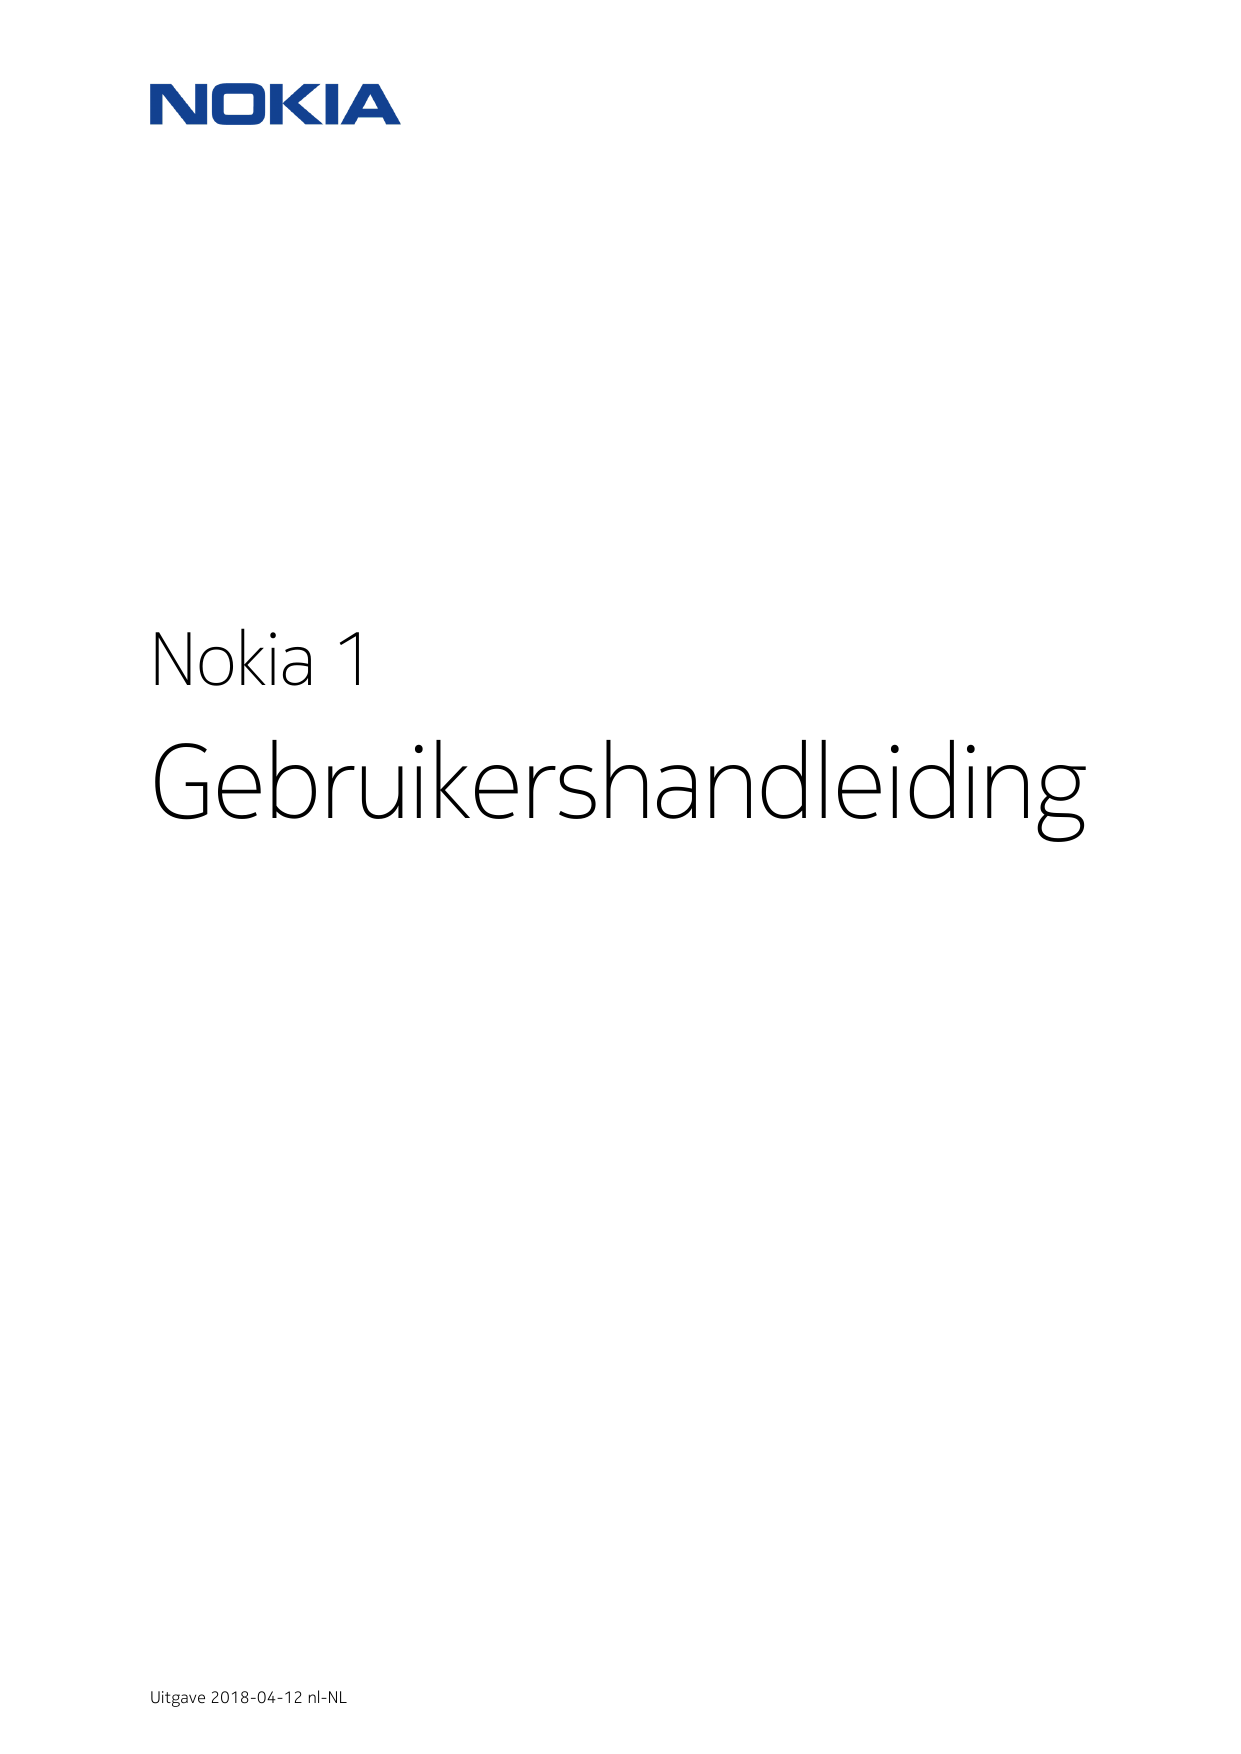 Nokia 1GebruikershandleidingUitgave 2018-04-12 nl-NL